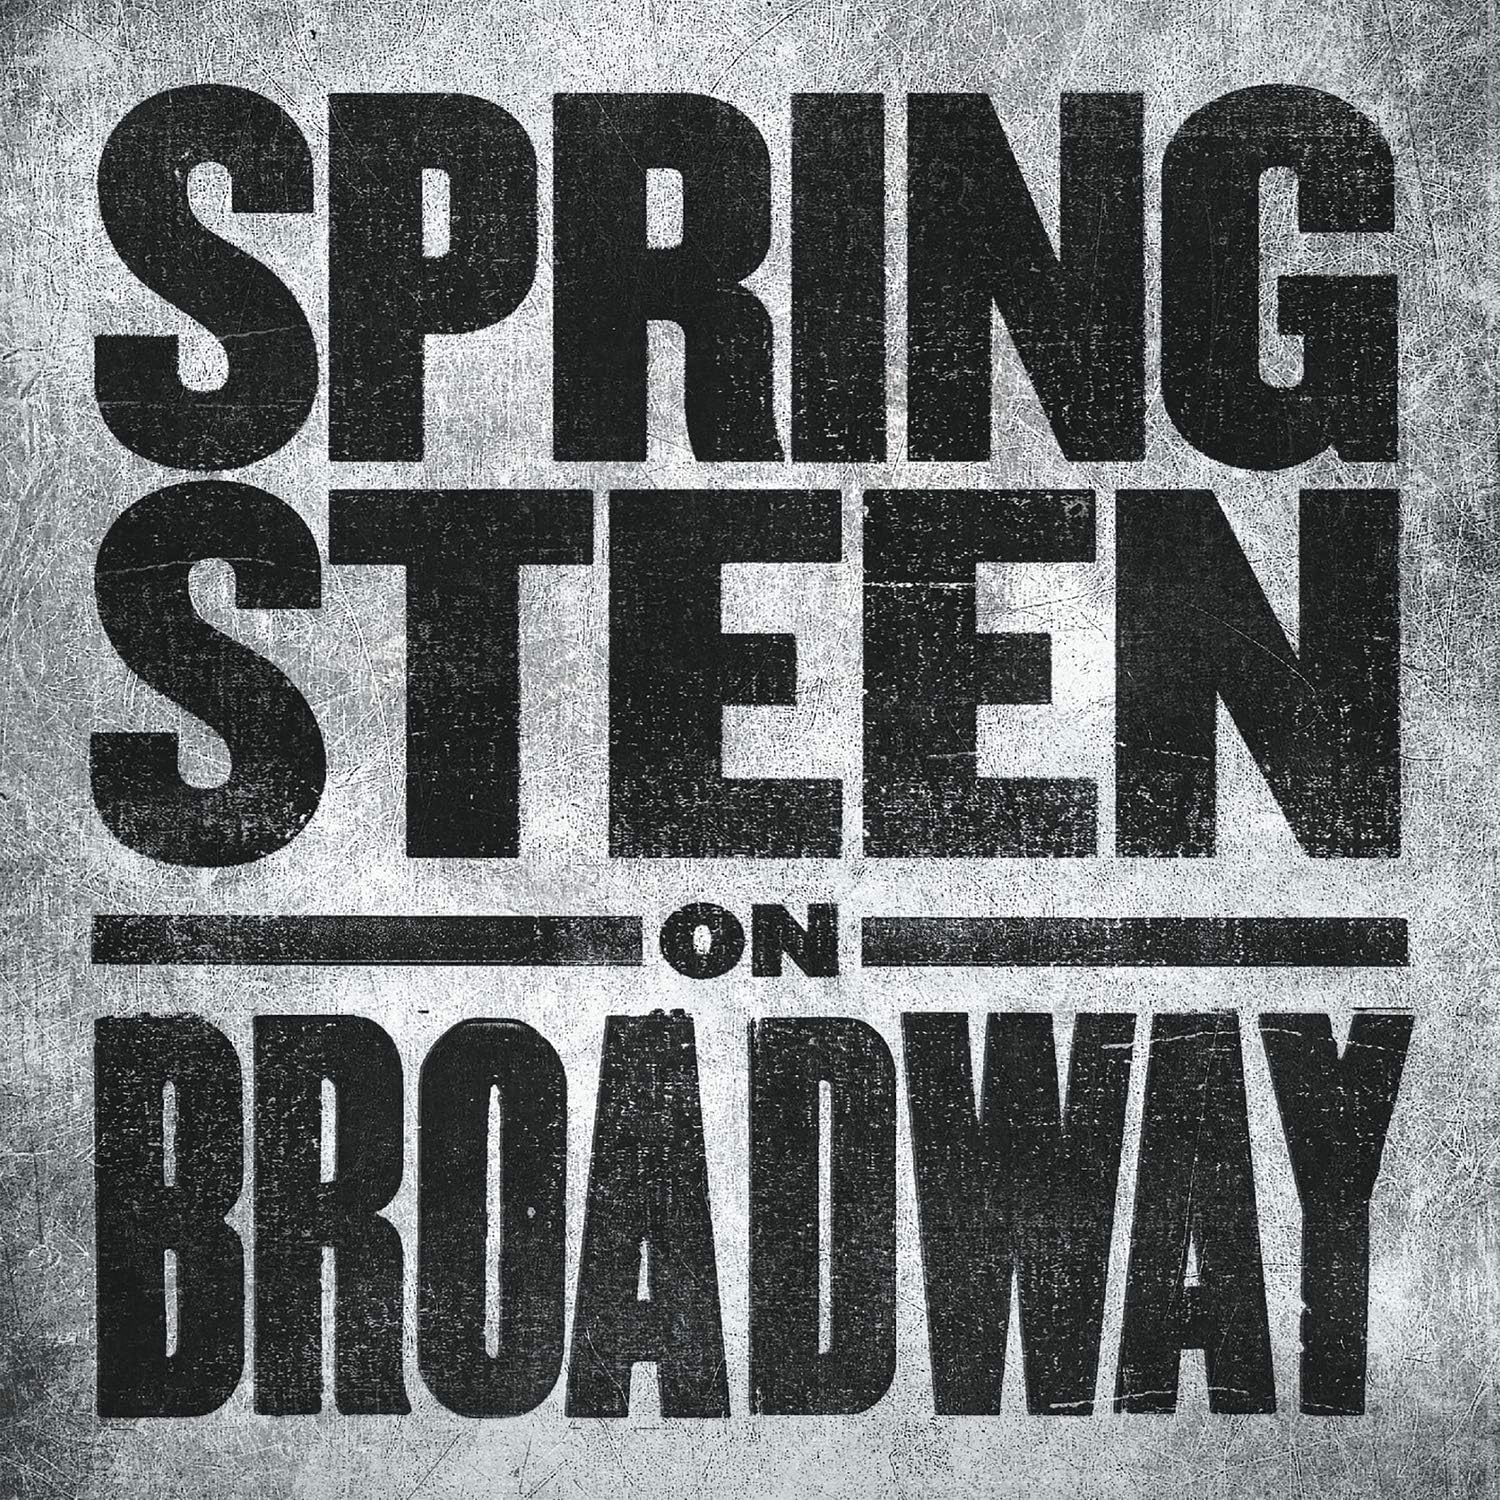 Springsteen on Broadway [2 CDs]